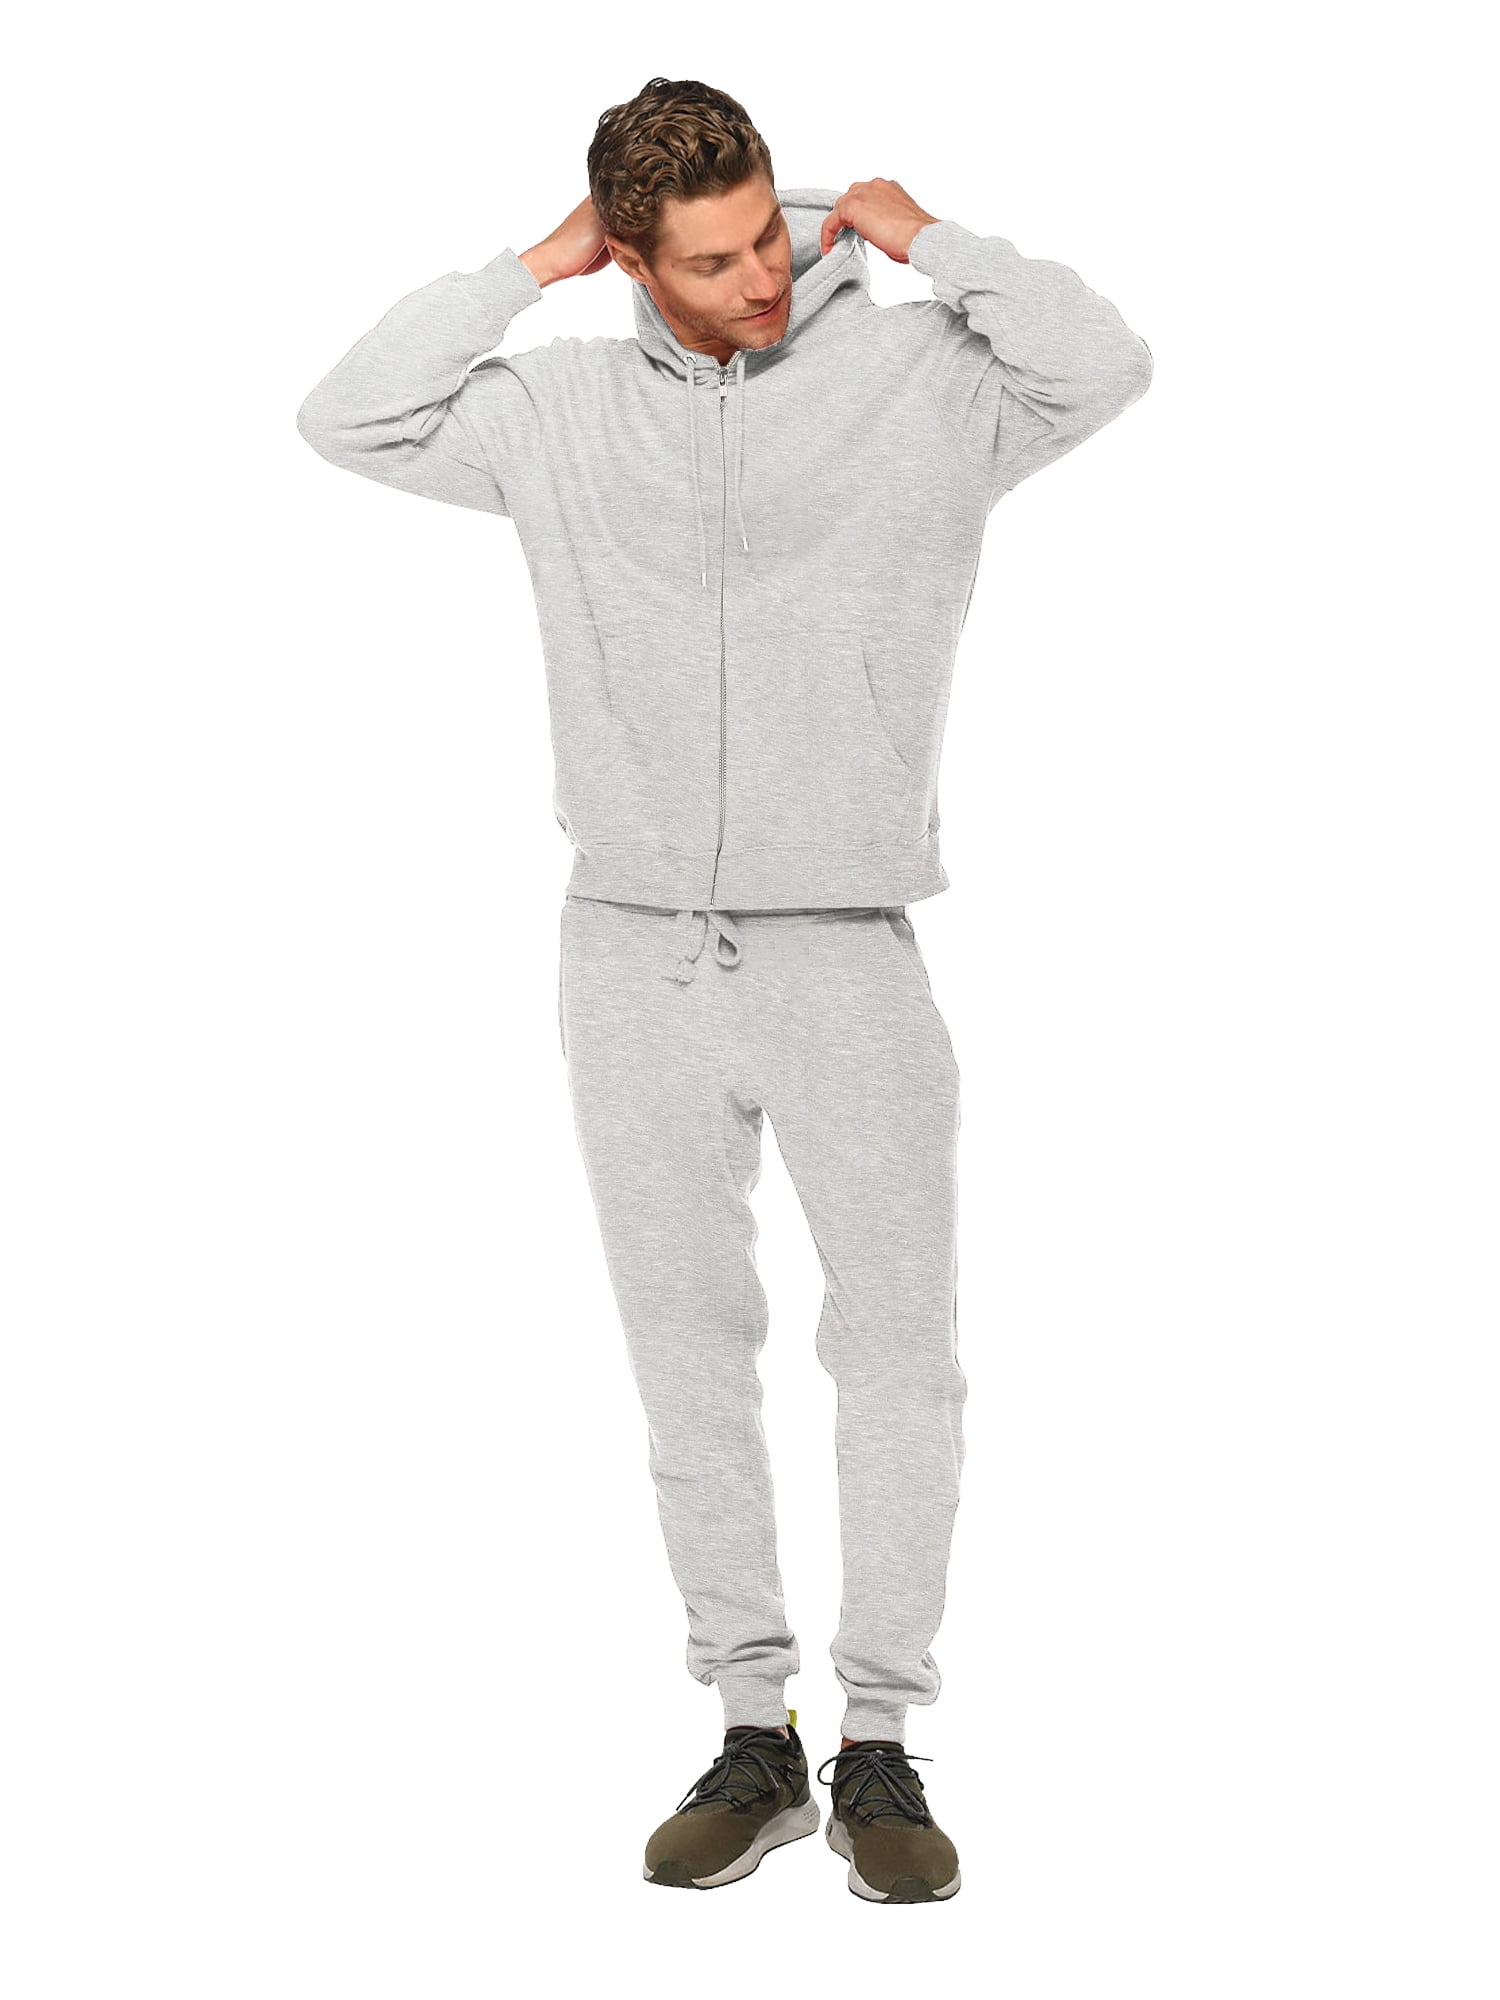 Hurrg Men Zipper Hoodie Sweatshirt Two Pieces Sport Pants Sweatsuit Outfit Set 